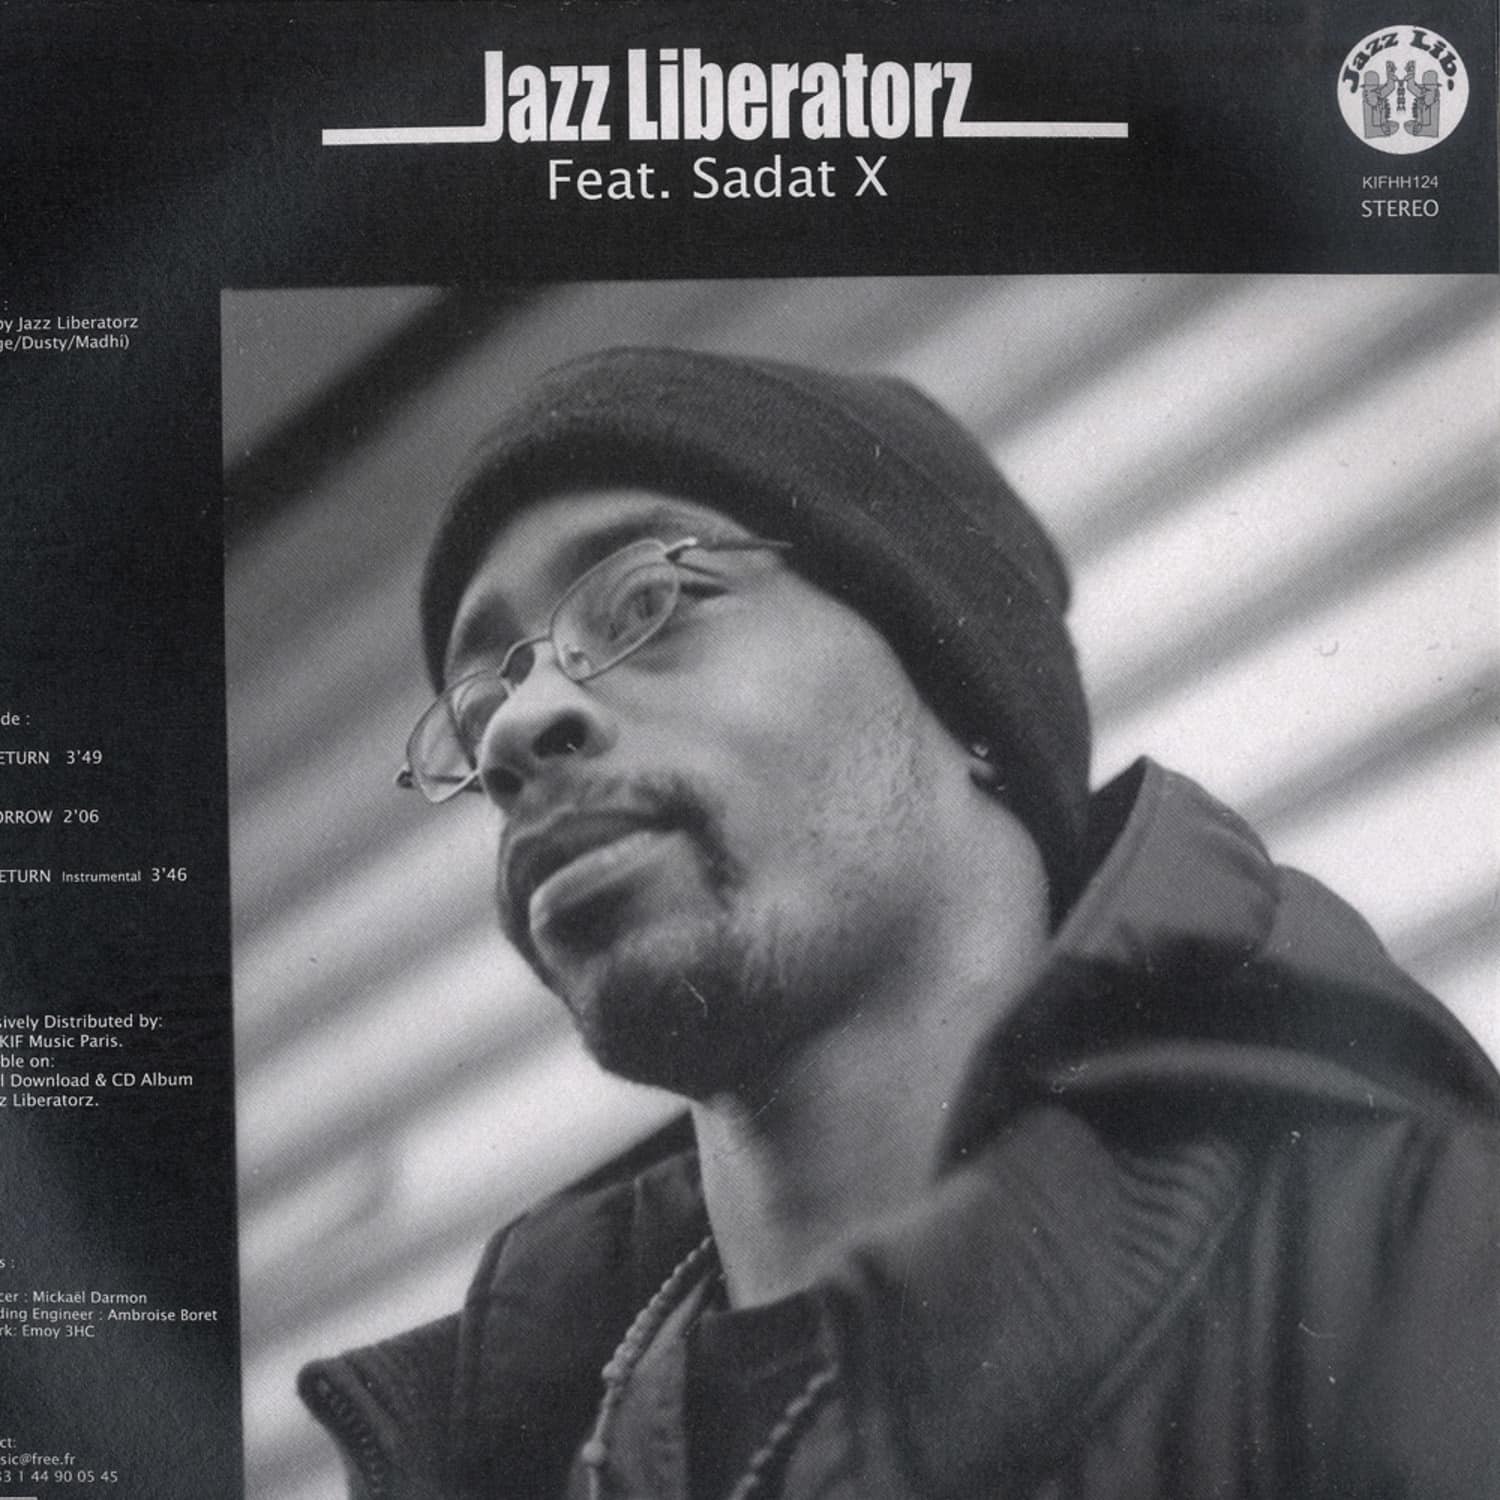 Jazz Liberatorz - THE RETURN